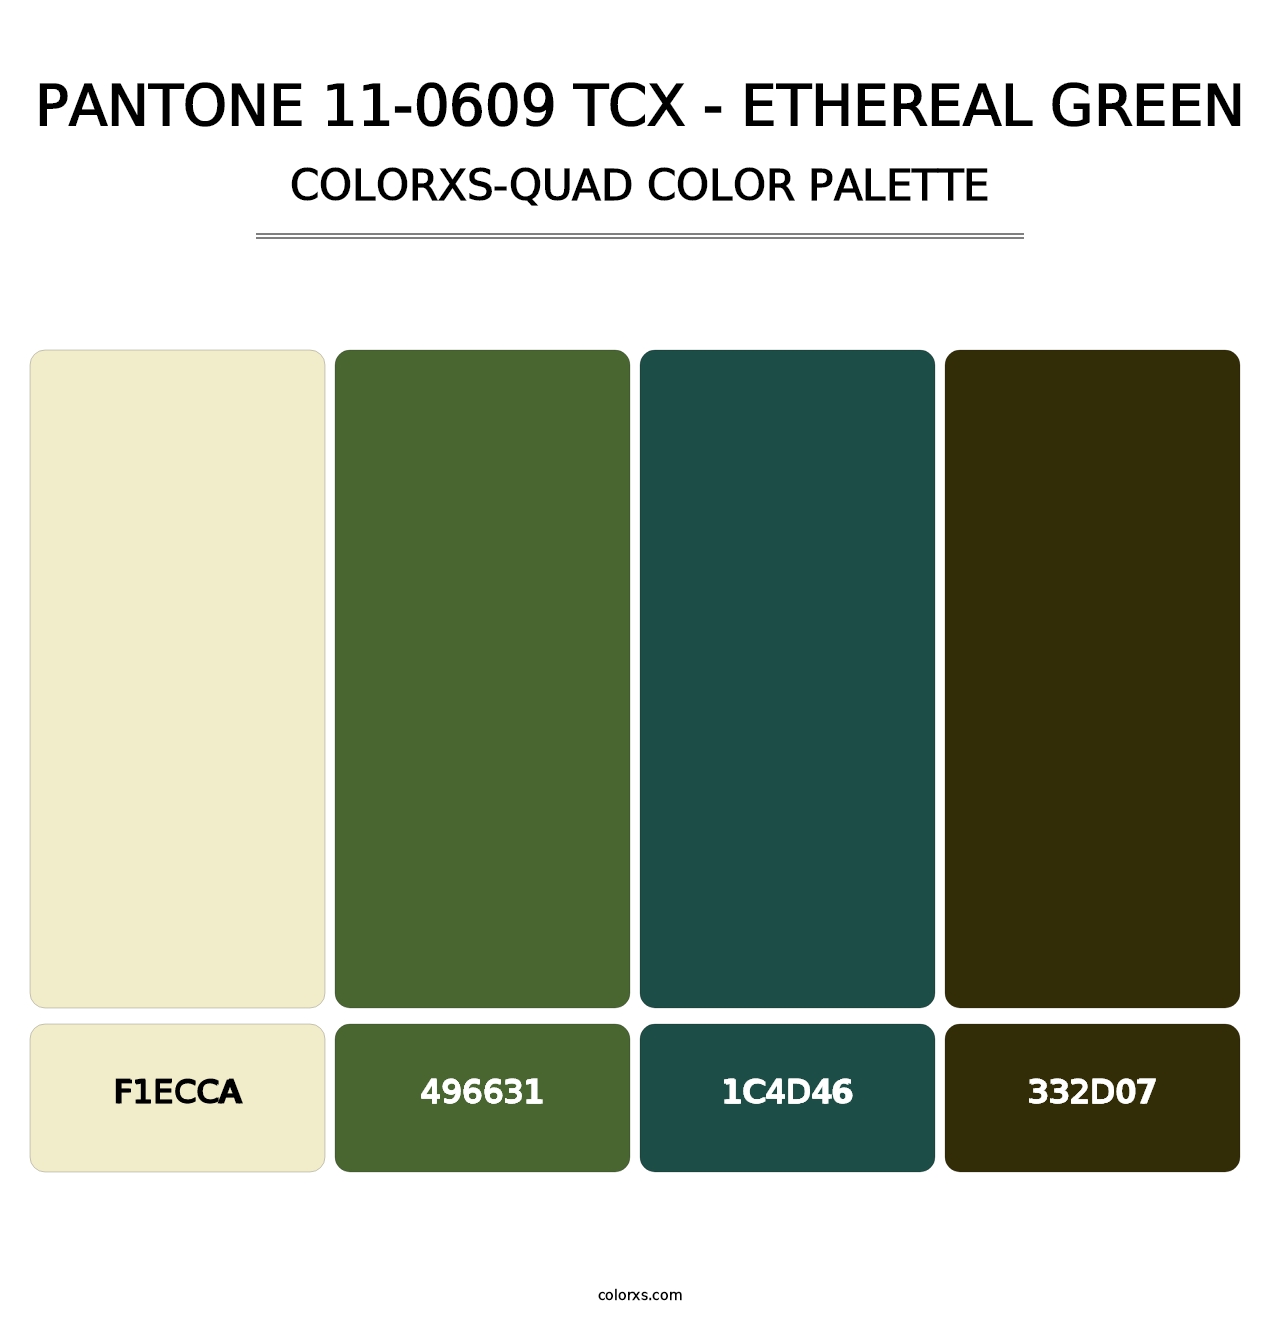 PANTONE 11-0609 TCX - Ethereal Green - Colorxs Quad Palette